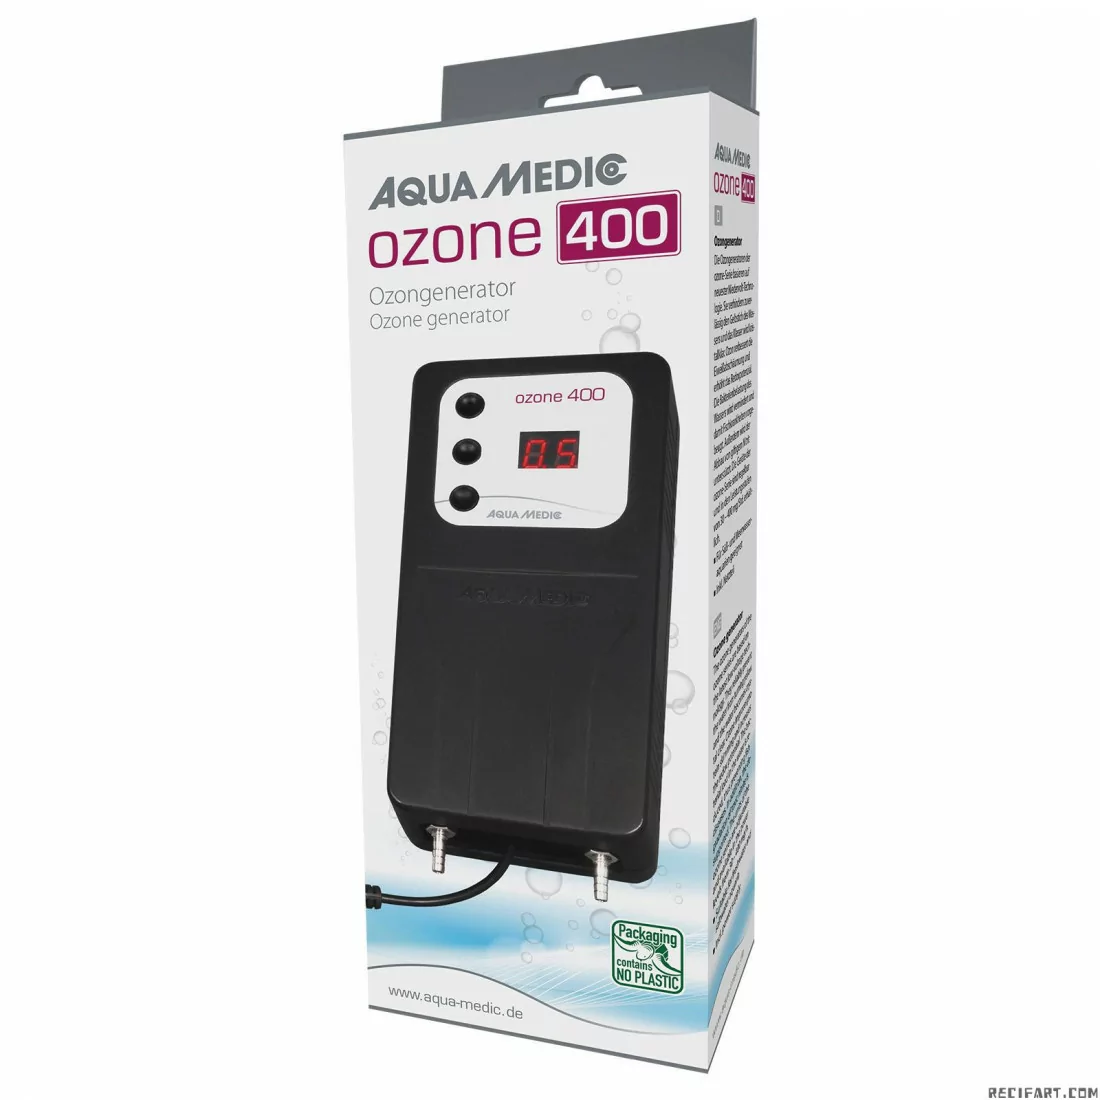 Ozone 400